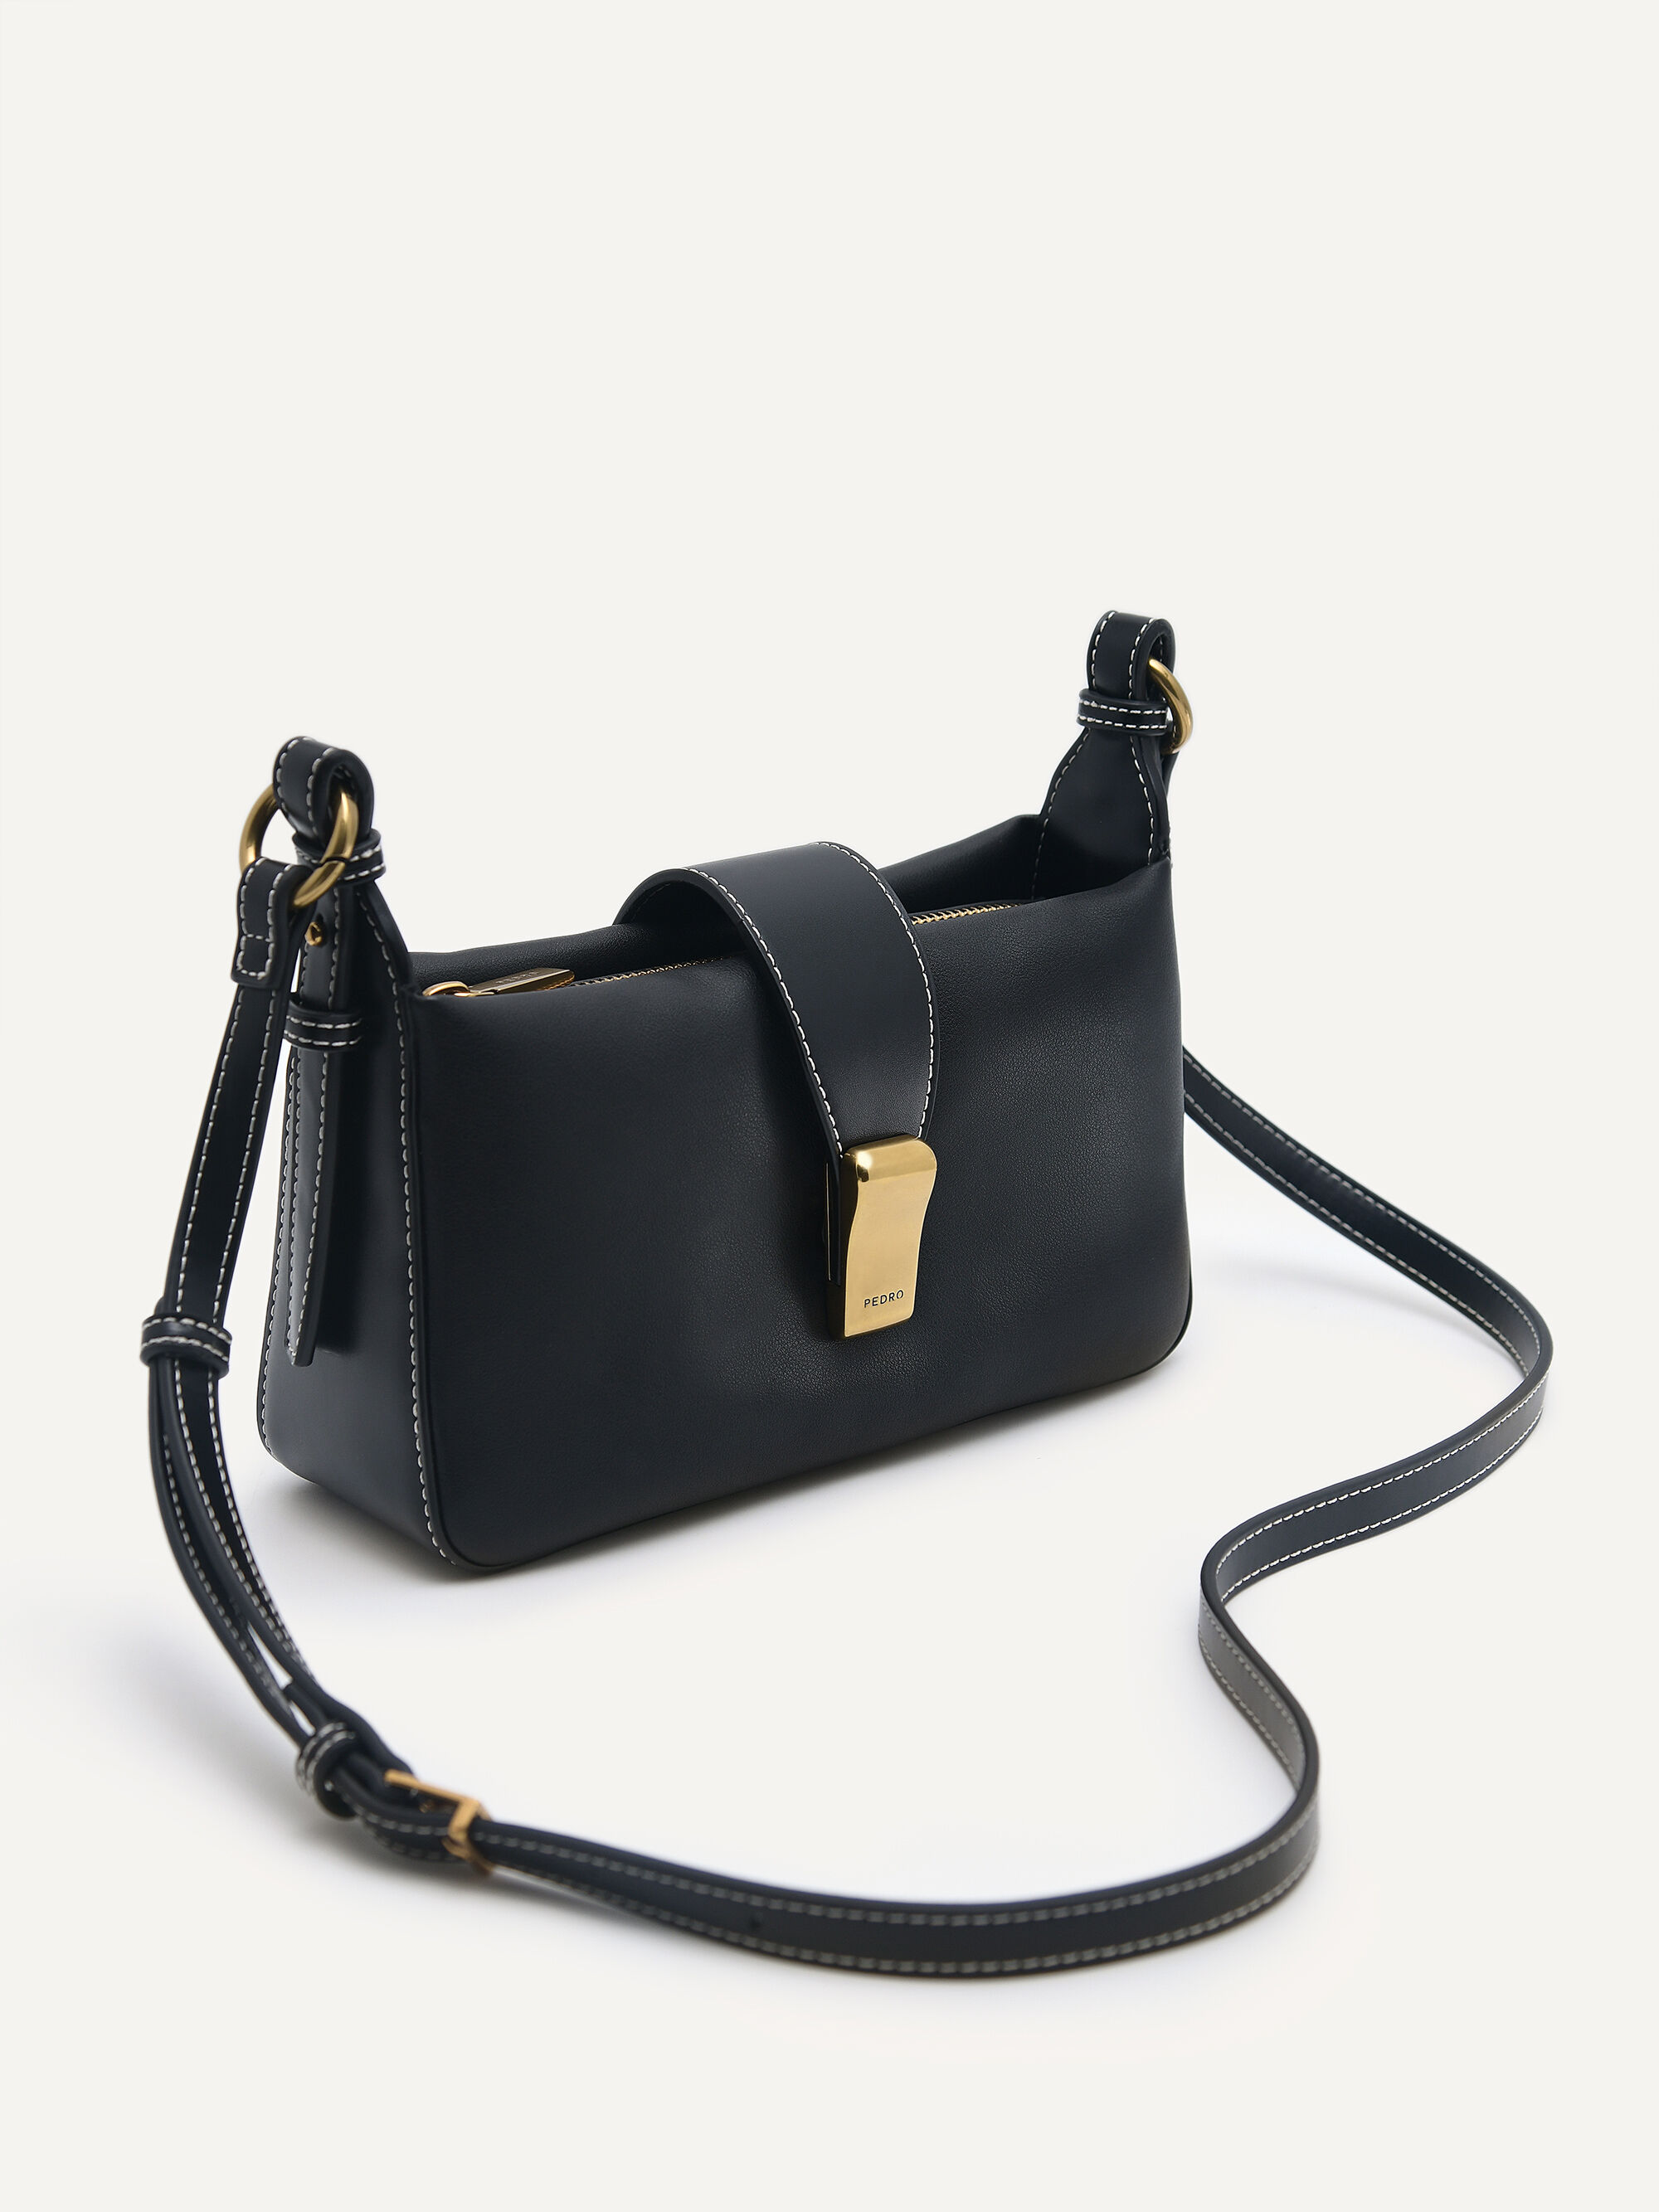 PEDRO Pinto Mini Shoulder Bag for Women